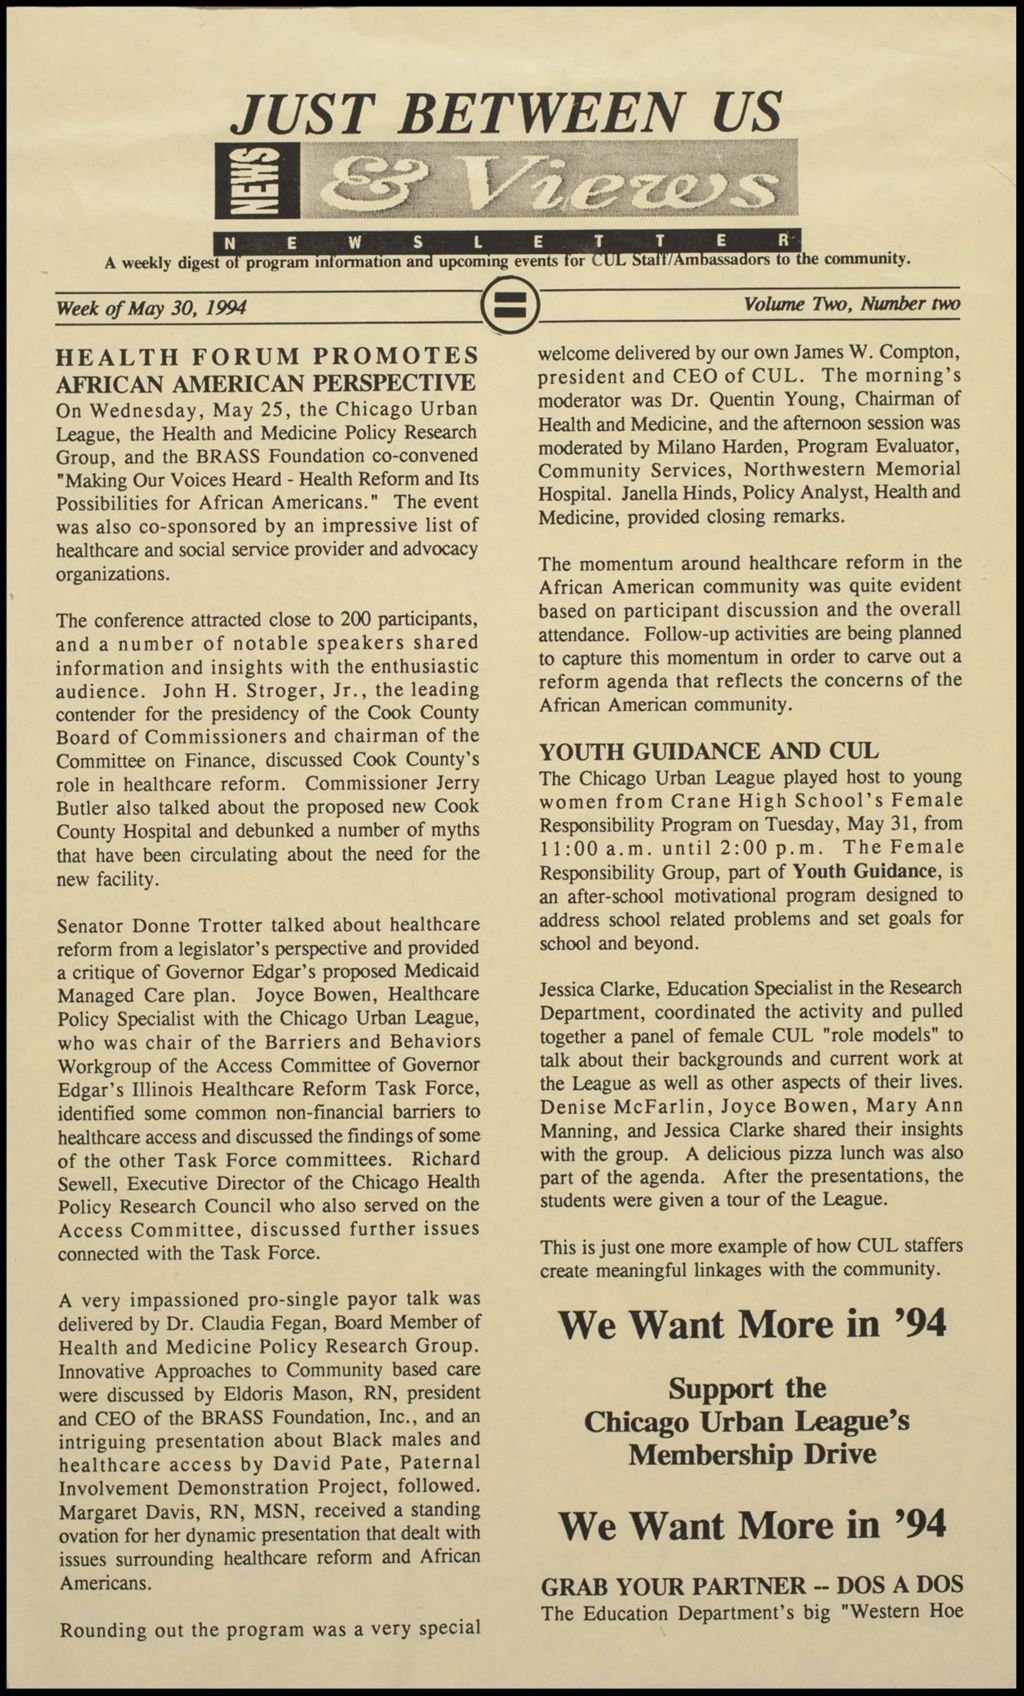 Miniature of CUL Employee Newsletter "Just Between Us", News and Views, 1994 (Folder IV-758)